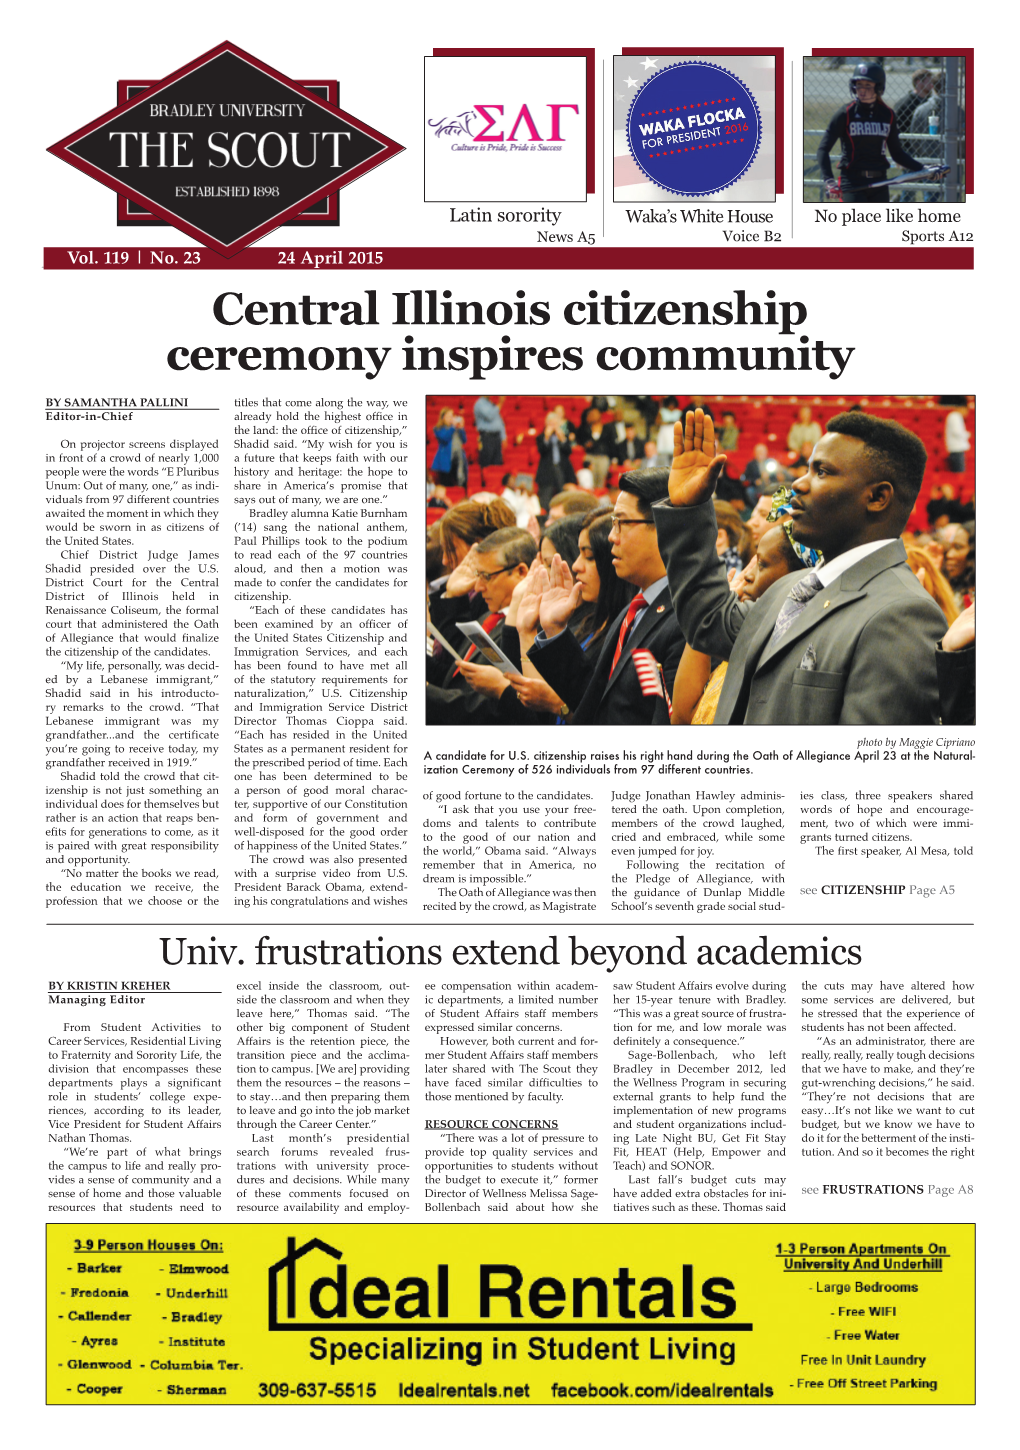 Central Illinois Citizenship Ceremony Inspires Community